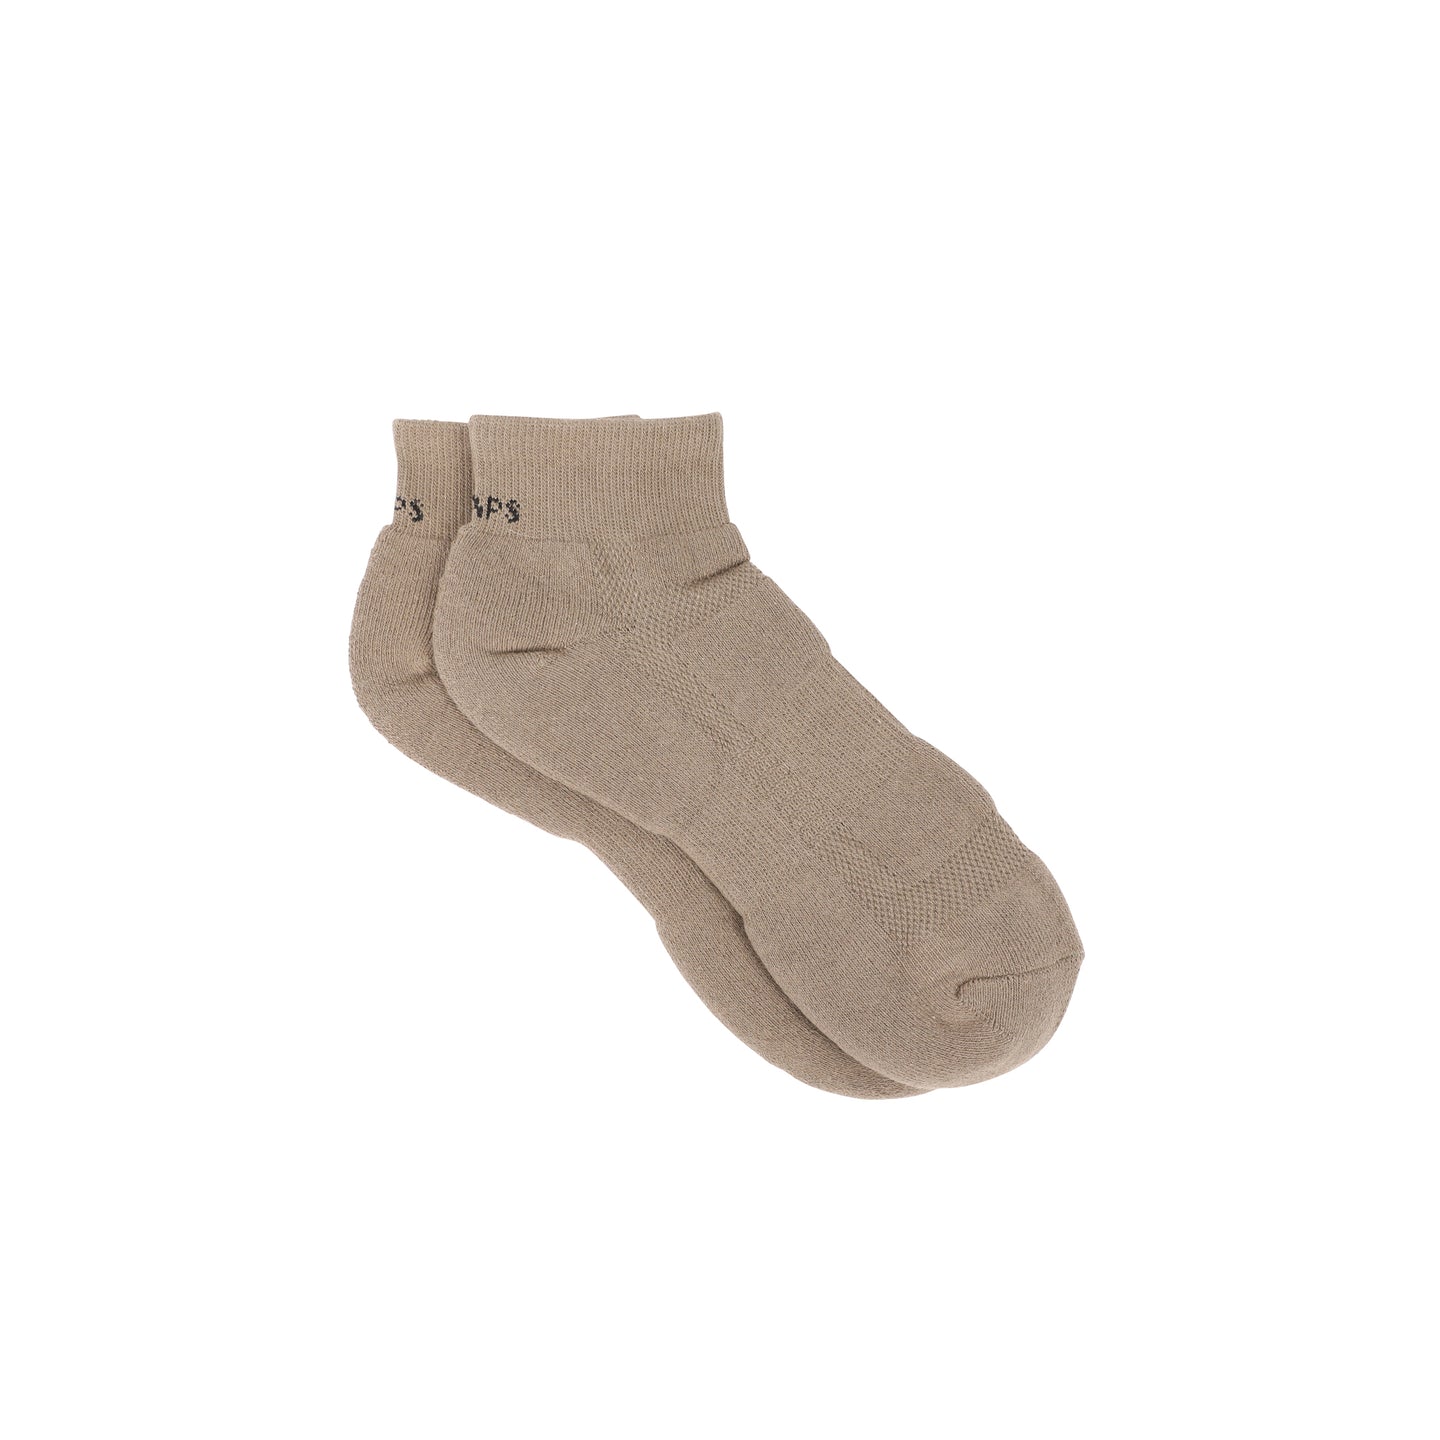 WTAPS Skivvies Ankle Socks Olive Drab